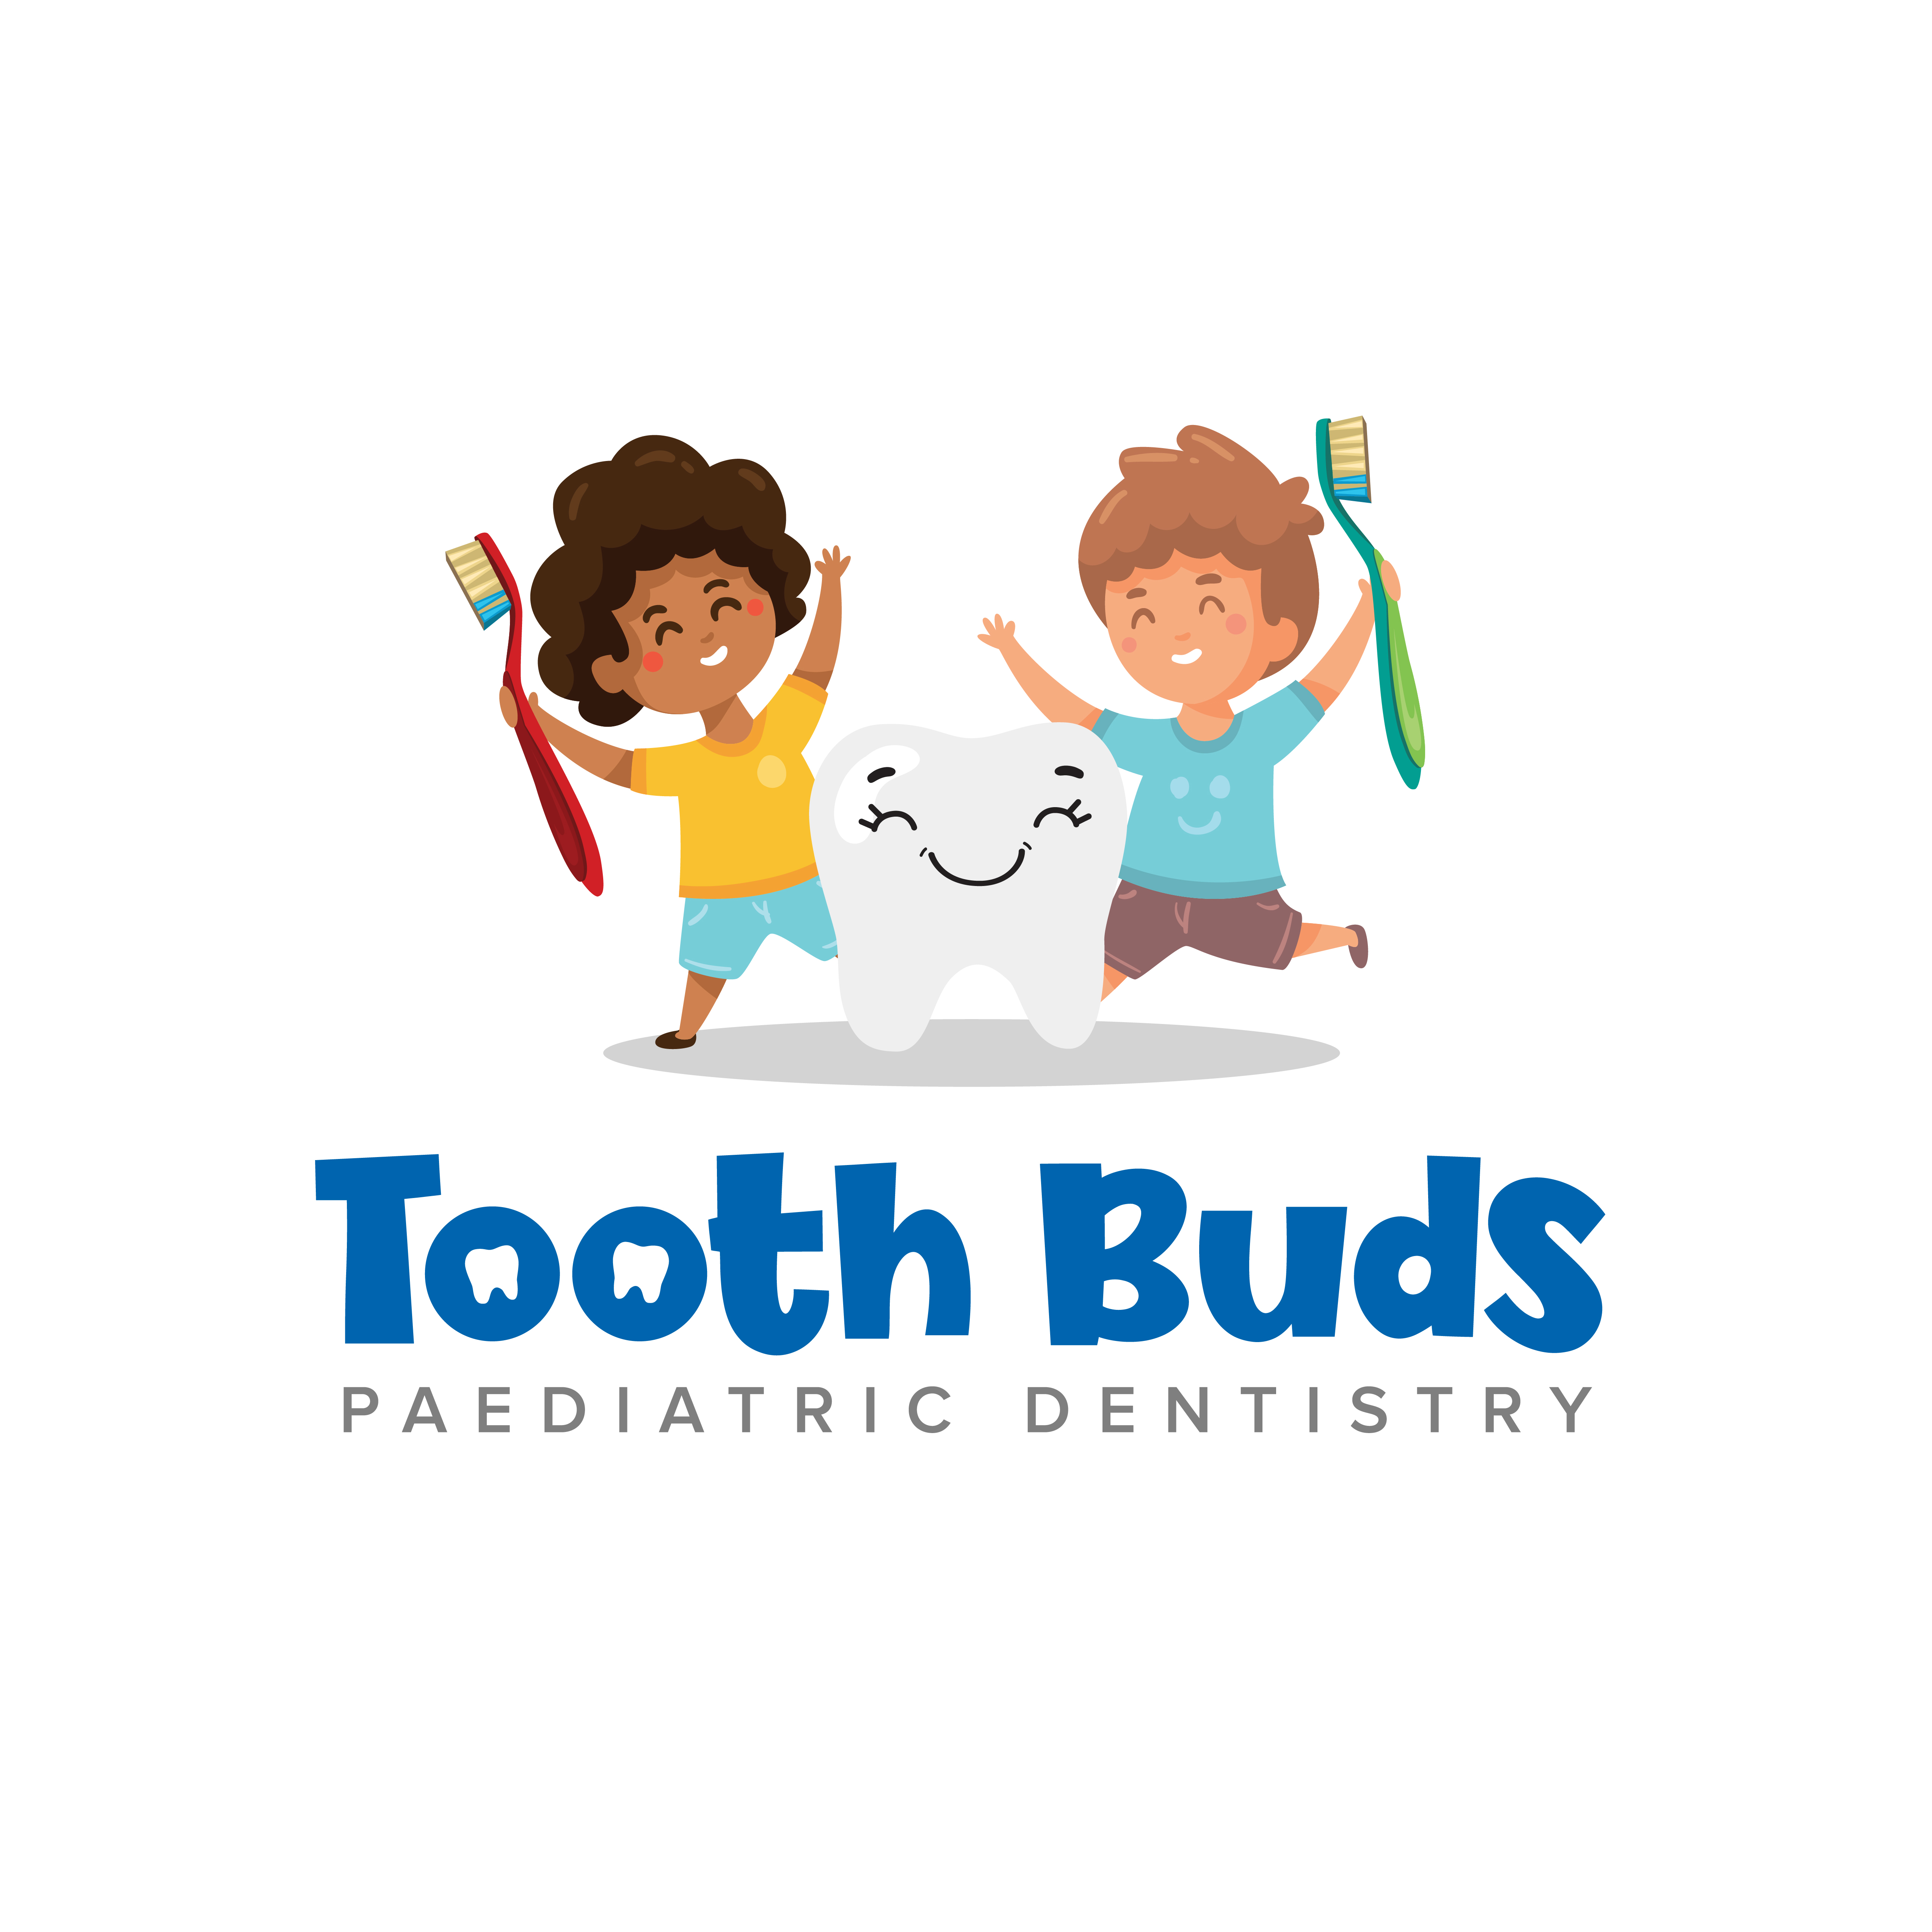 Tooth Buds Paediatric Dentistry LTD